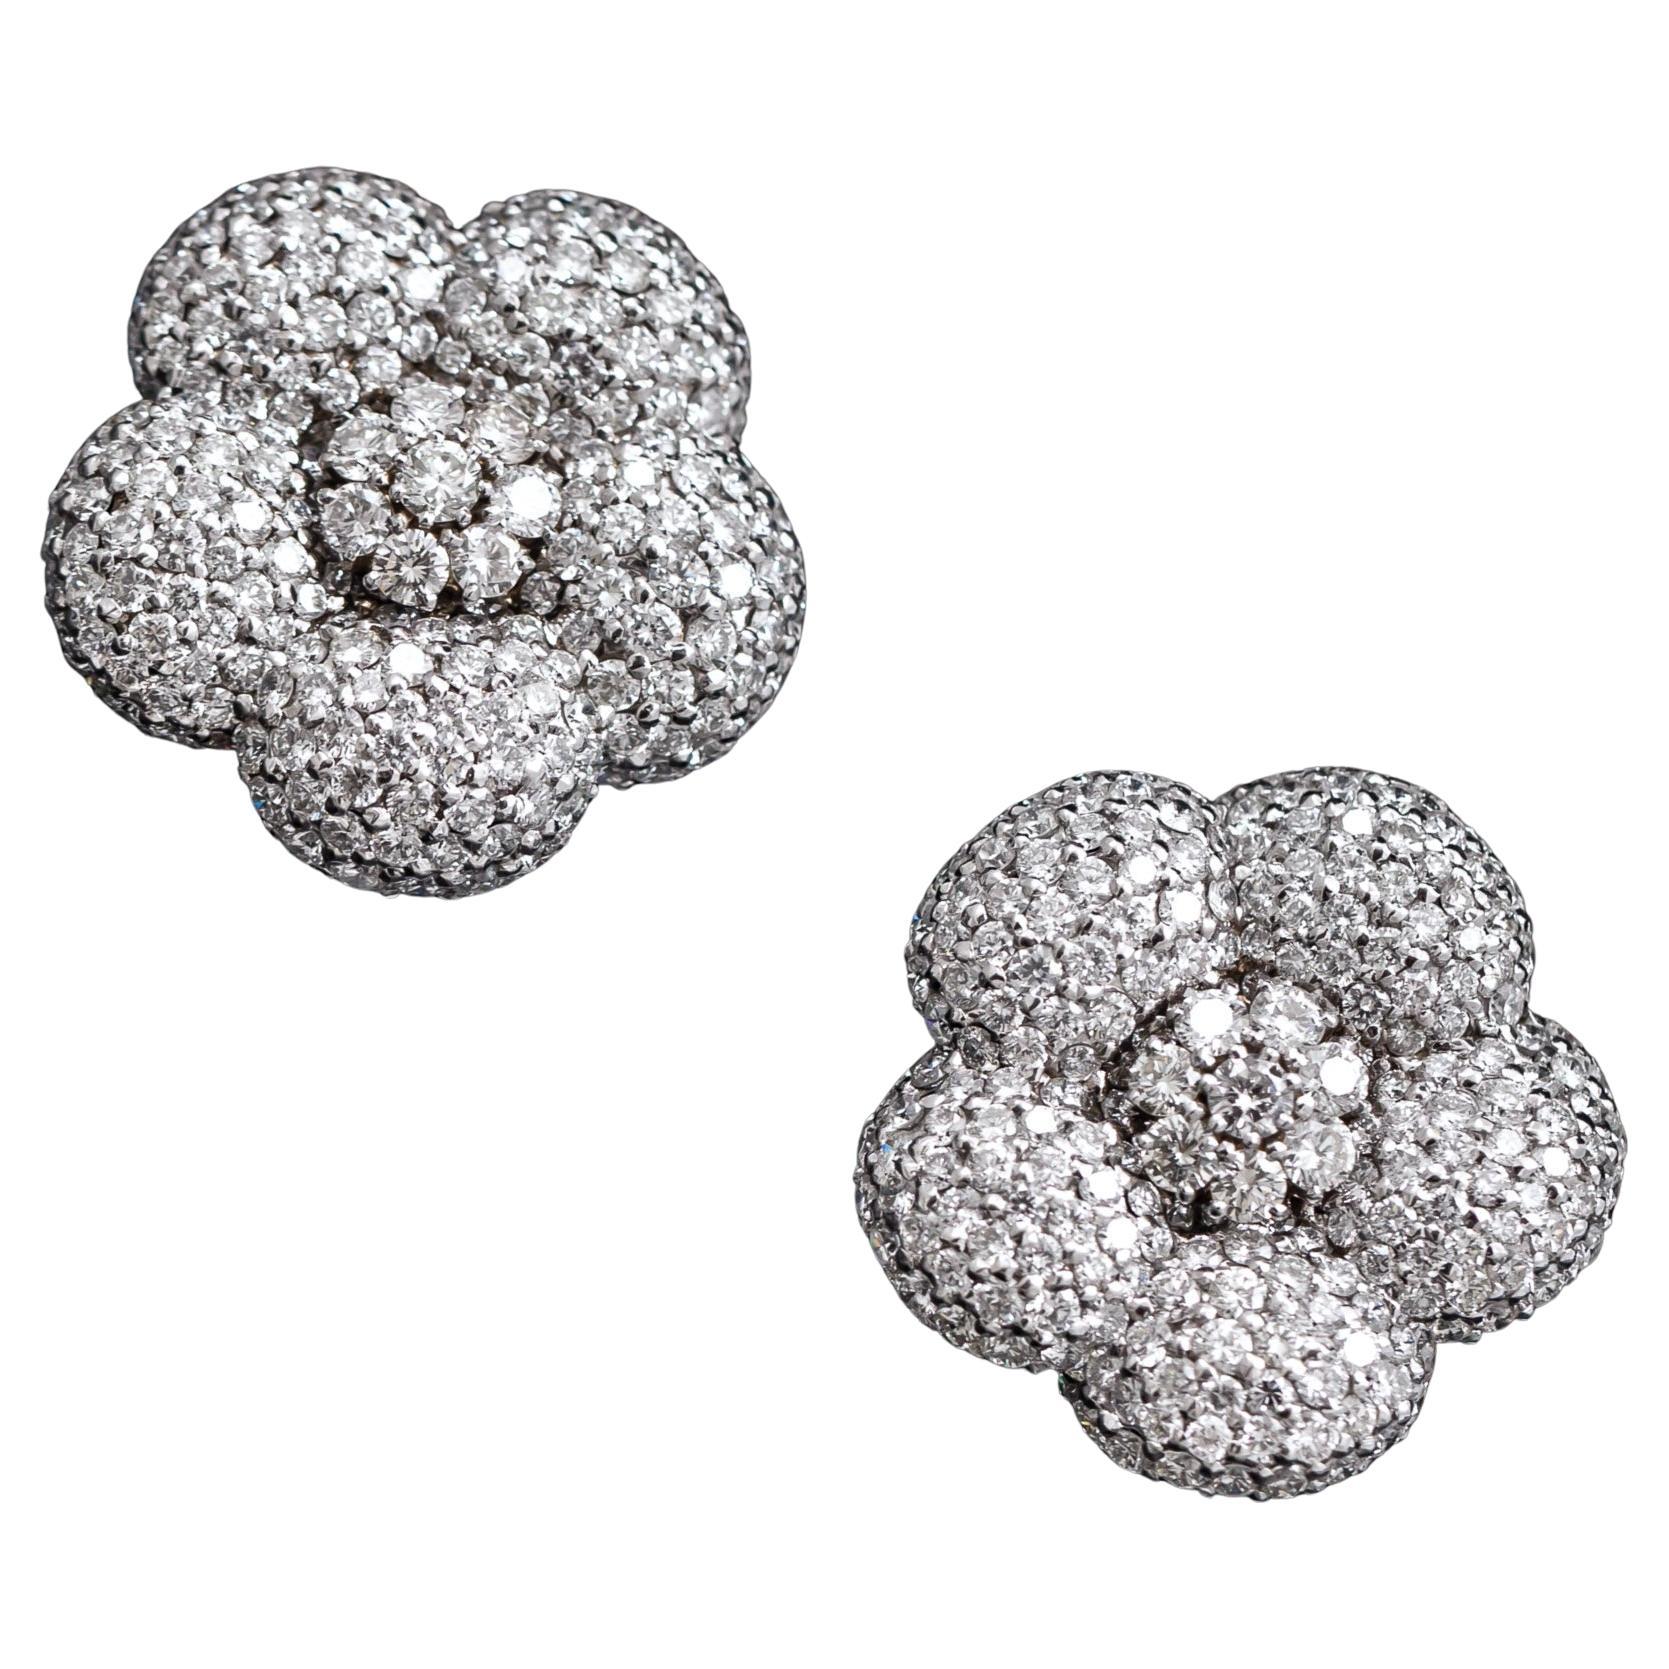 Vintage 12 Carat Diamond Flower Floral Earrings White Gold Portuguese 1990s